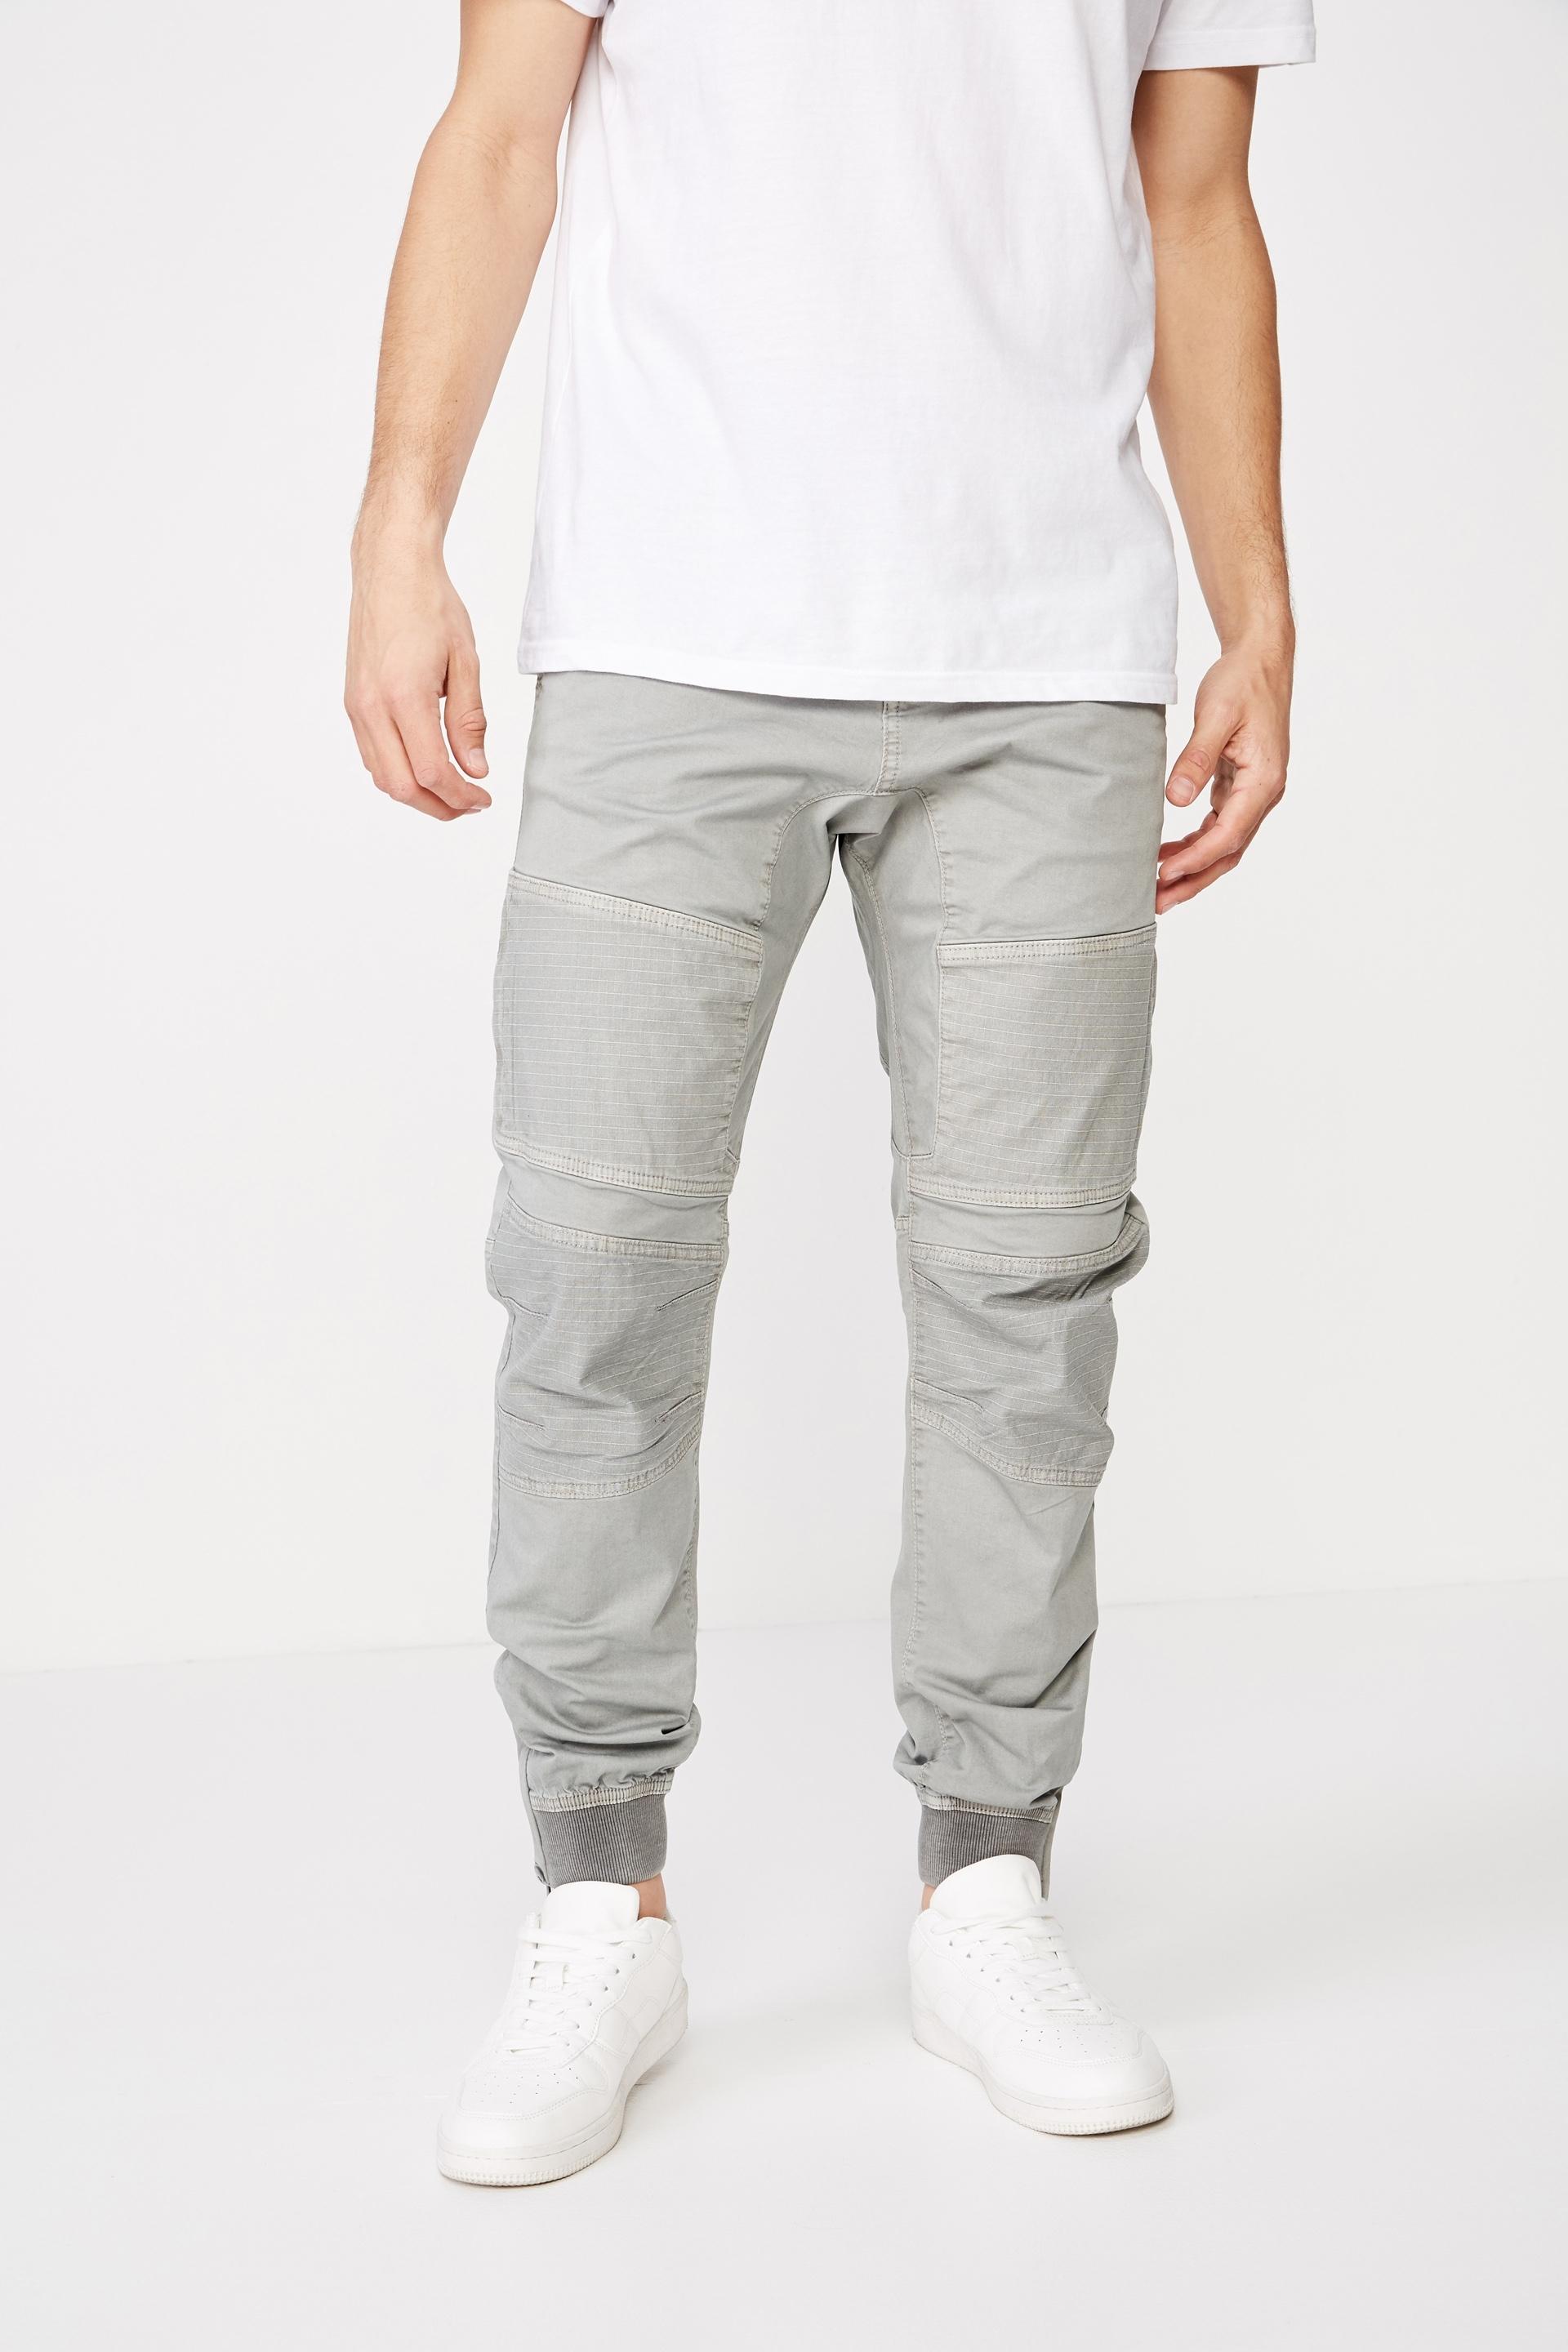 Urban jogger - grey ripstop utility Cotton On Pants & Chinos ...